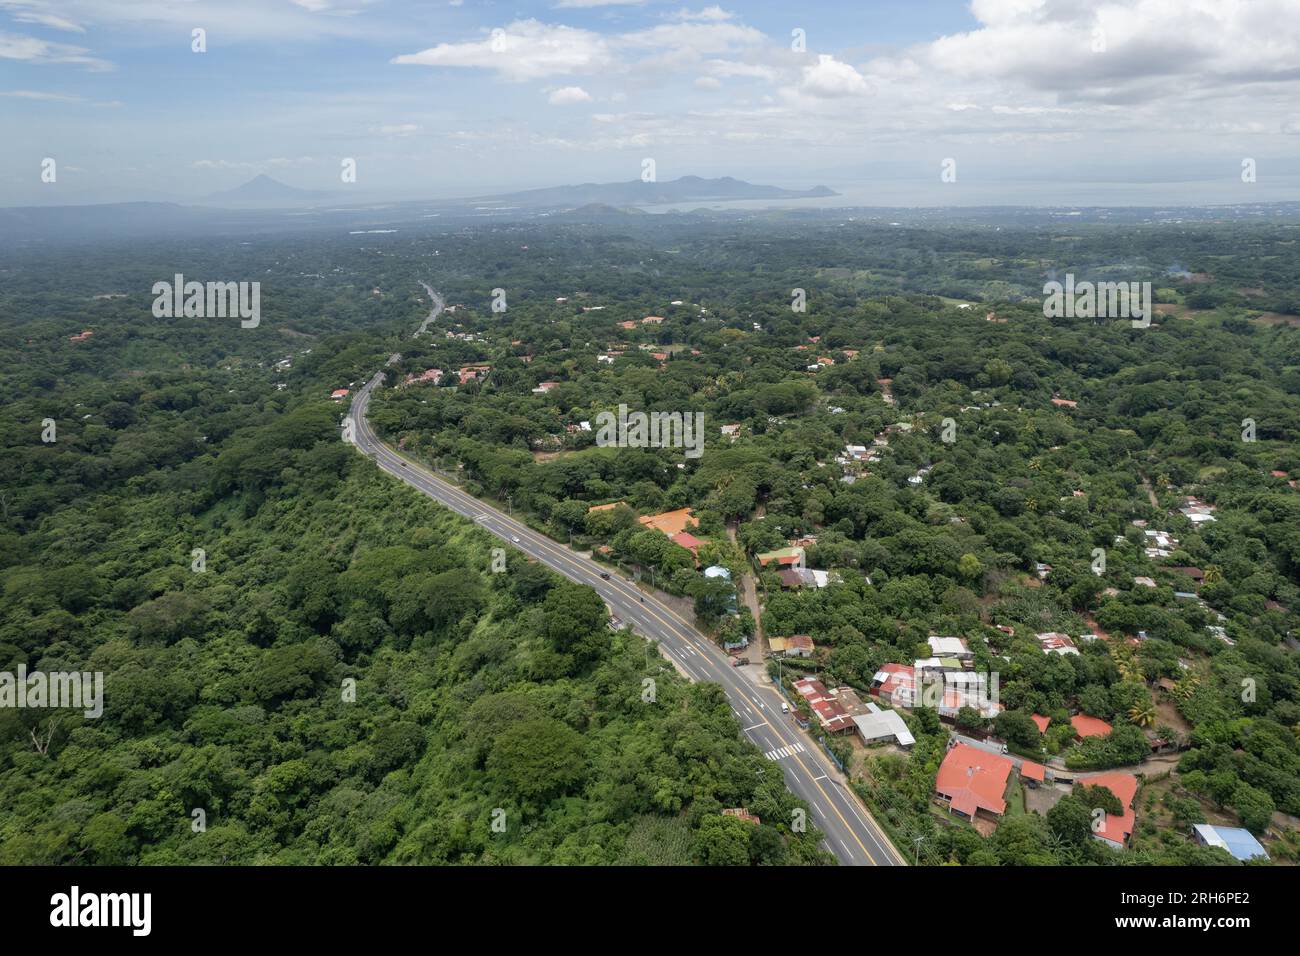 Nicaragua zentralamerika Landschaftsblick aus der Vogelperspektive an sonnigen Tagen Stockfoto